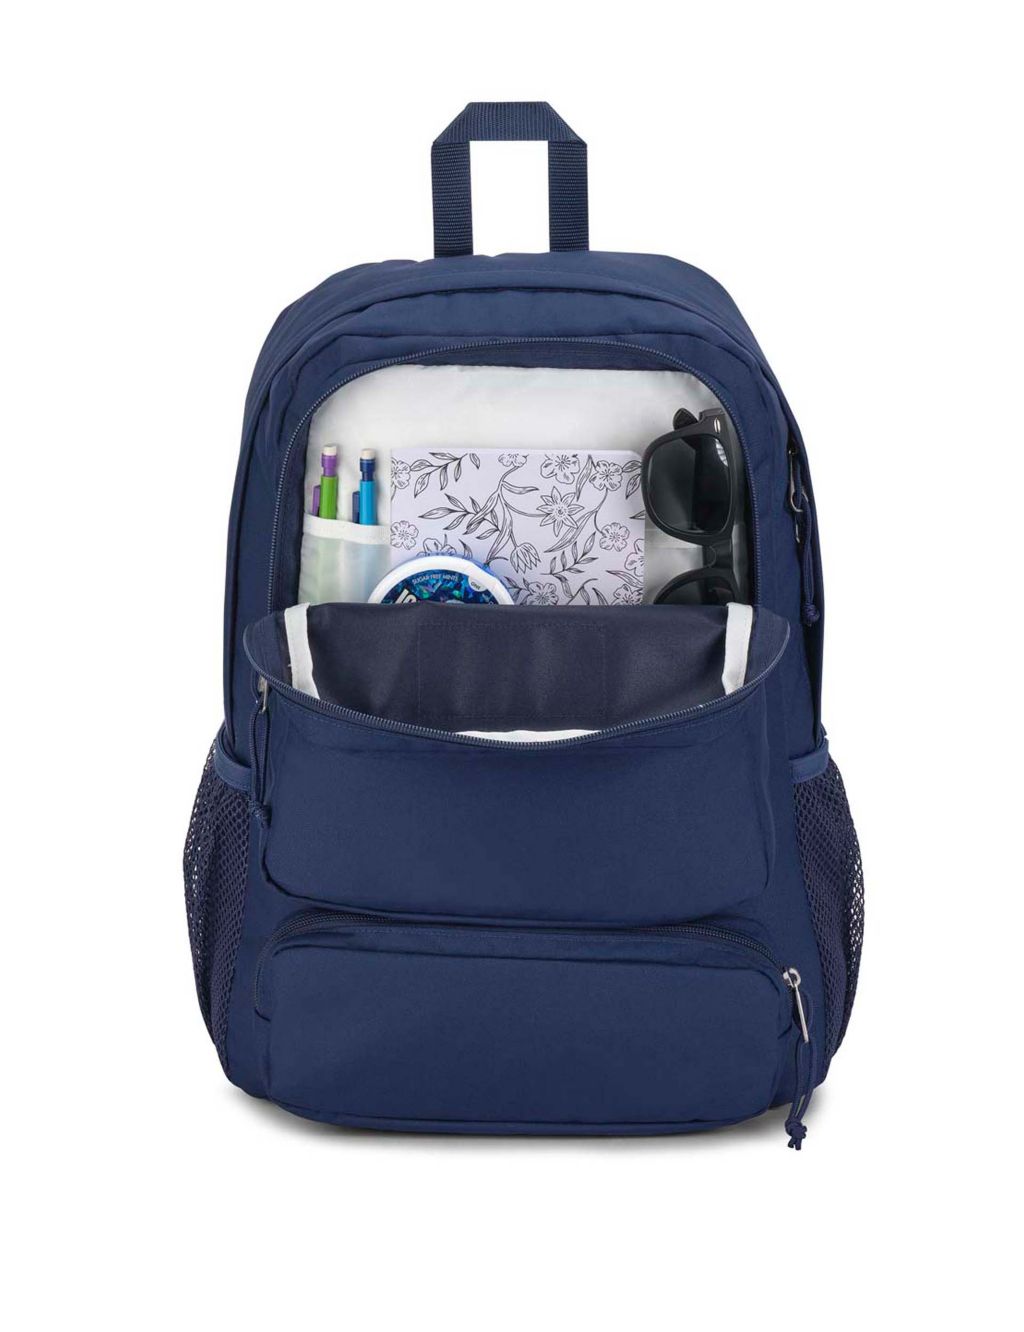 Doubleton Multi Pocket Backpack image 3